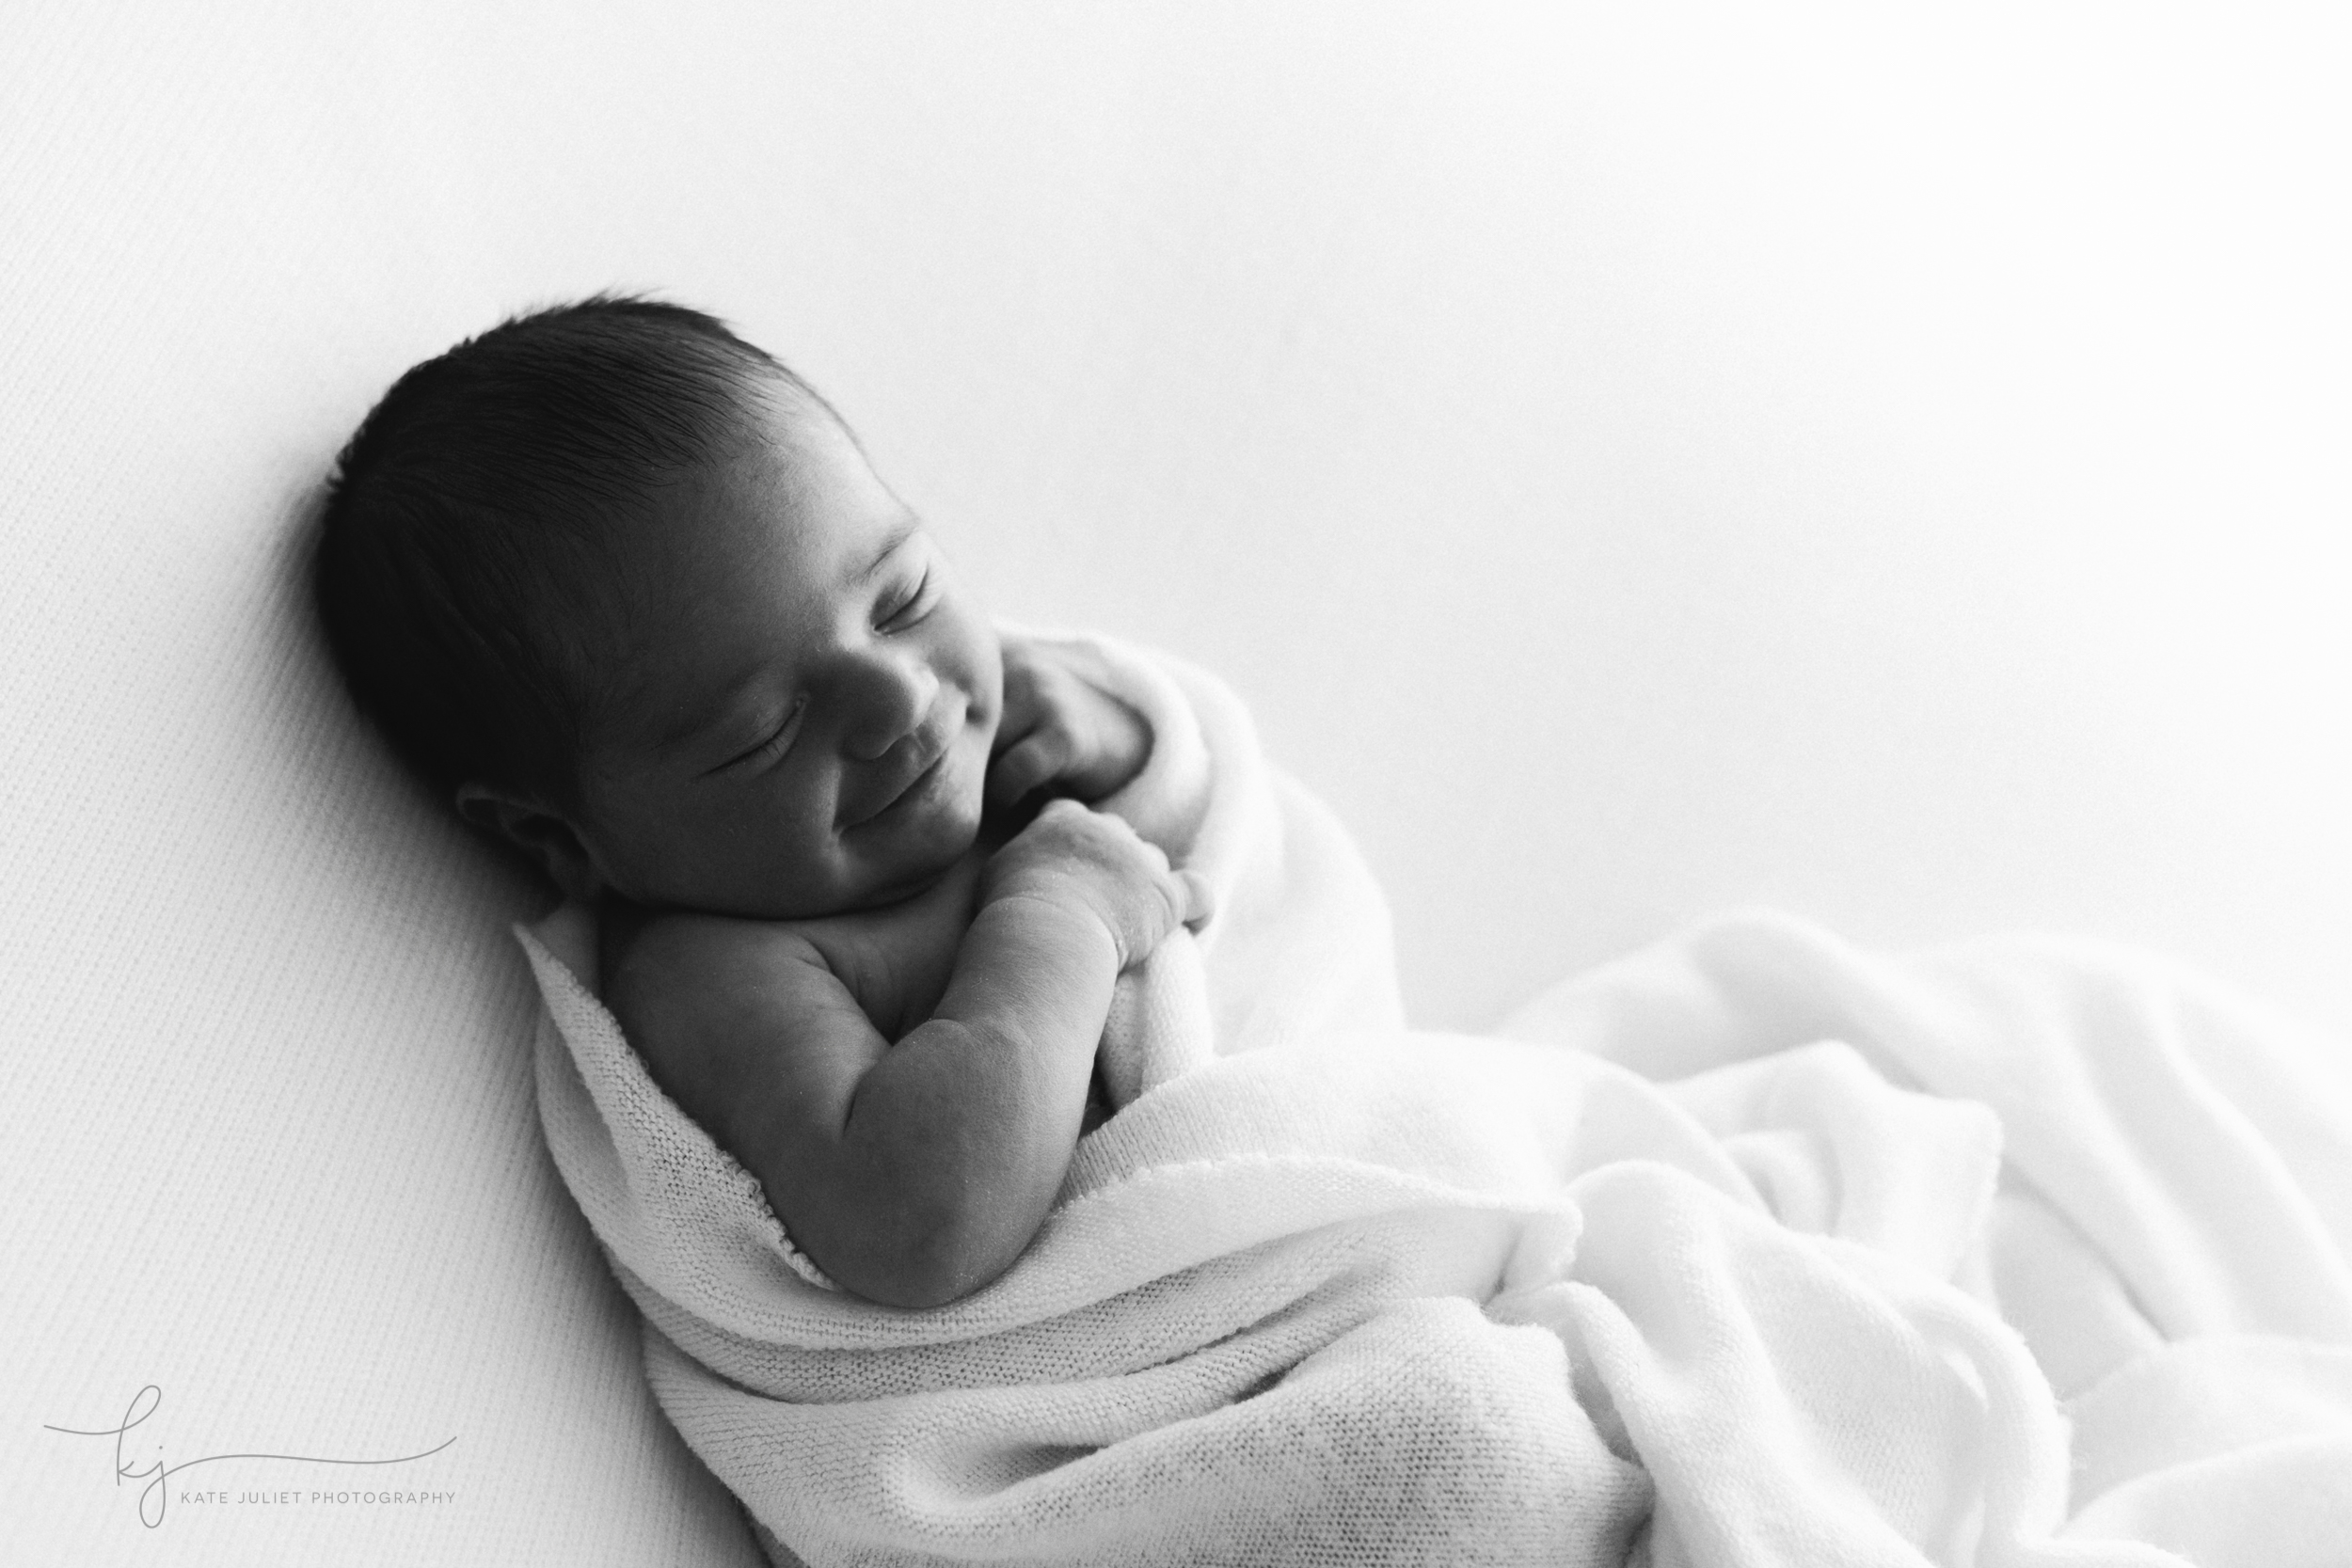 kate_juliet_photography_newborn_web-1 (1).jpg